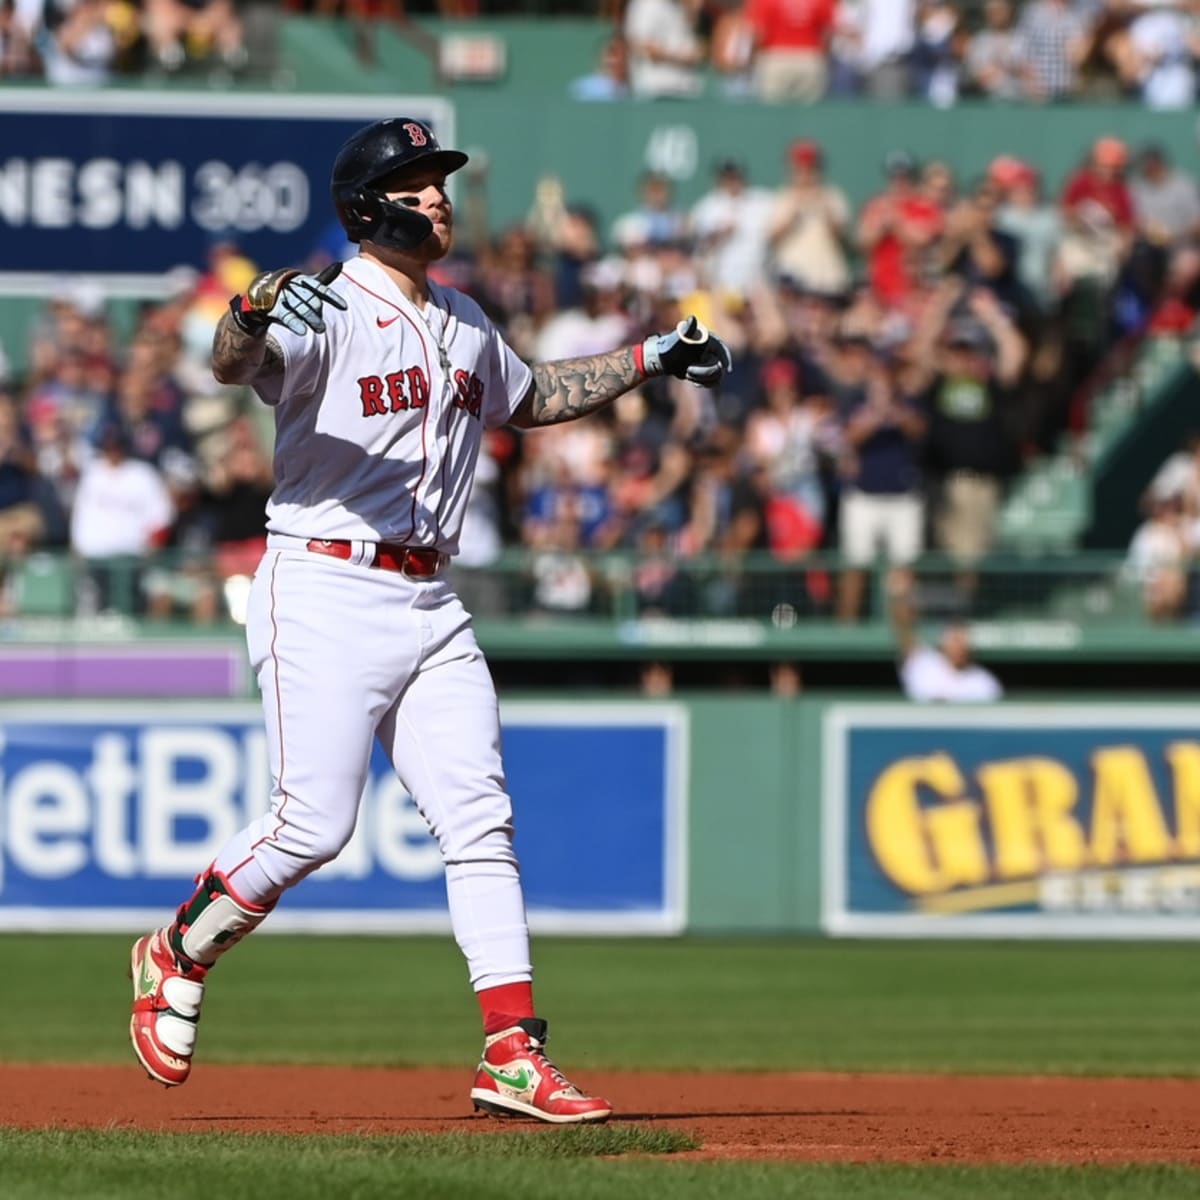 Boston Red Sox 2021 Season Preview: Will Alex Verdugo be more